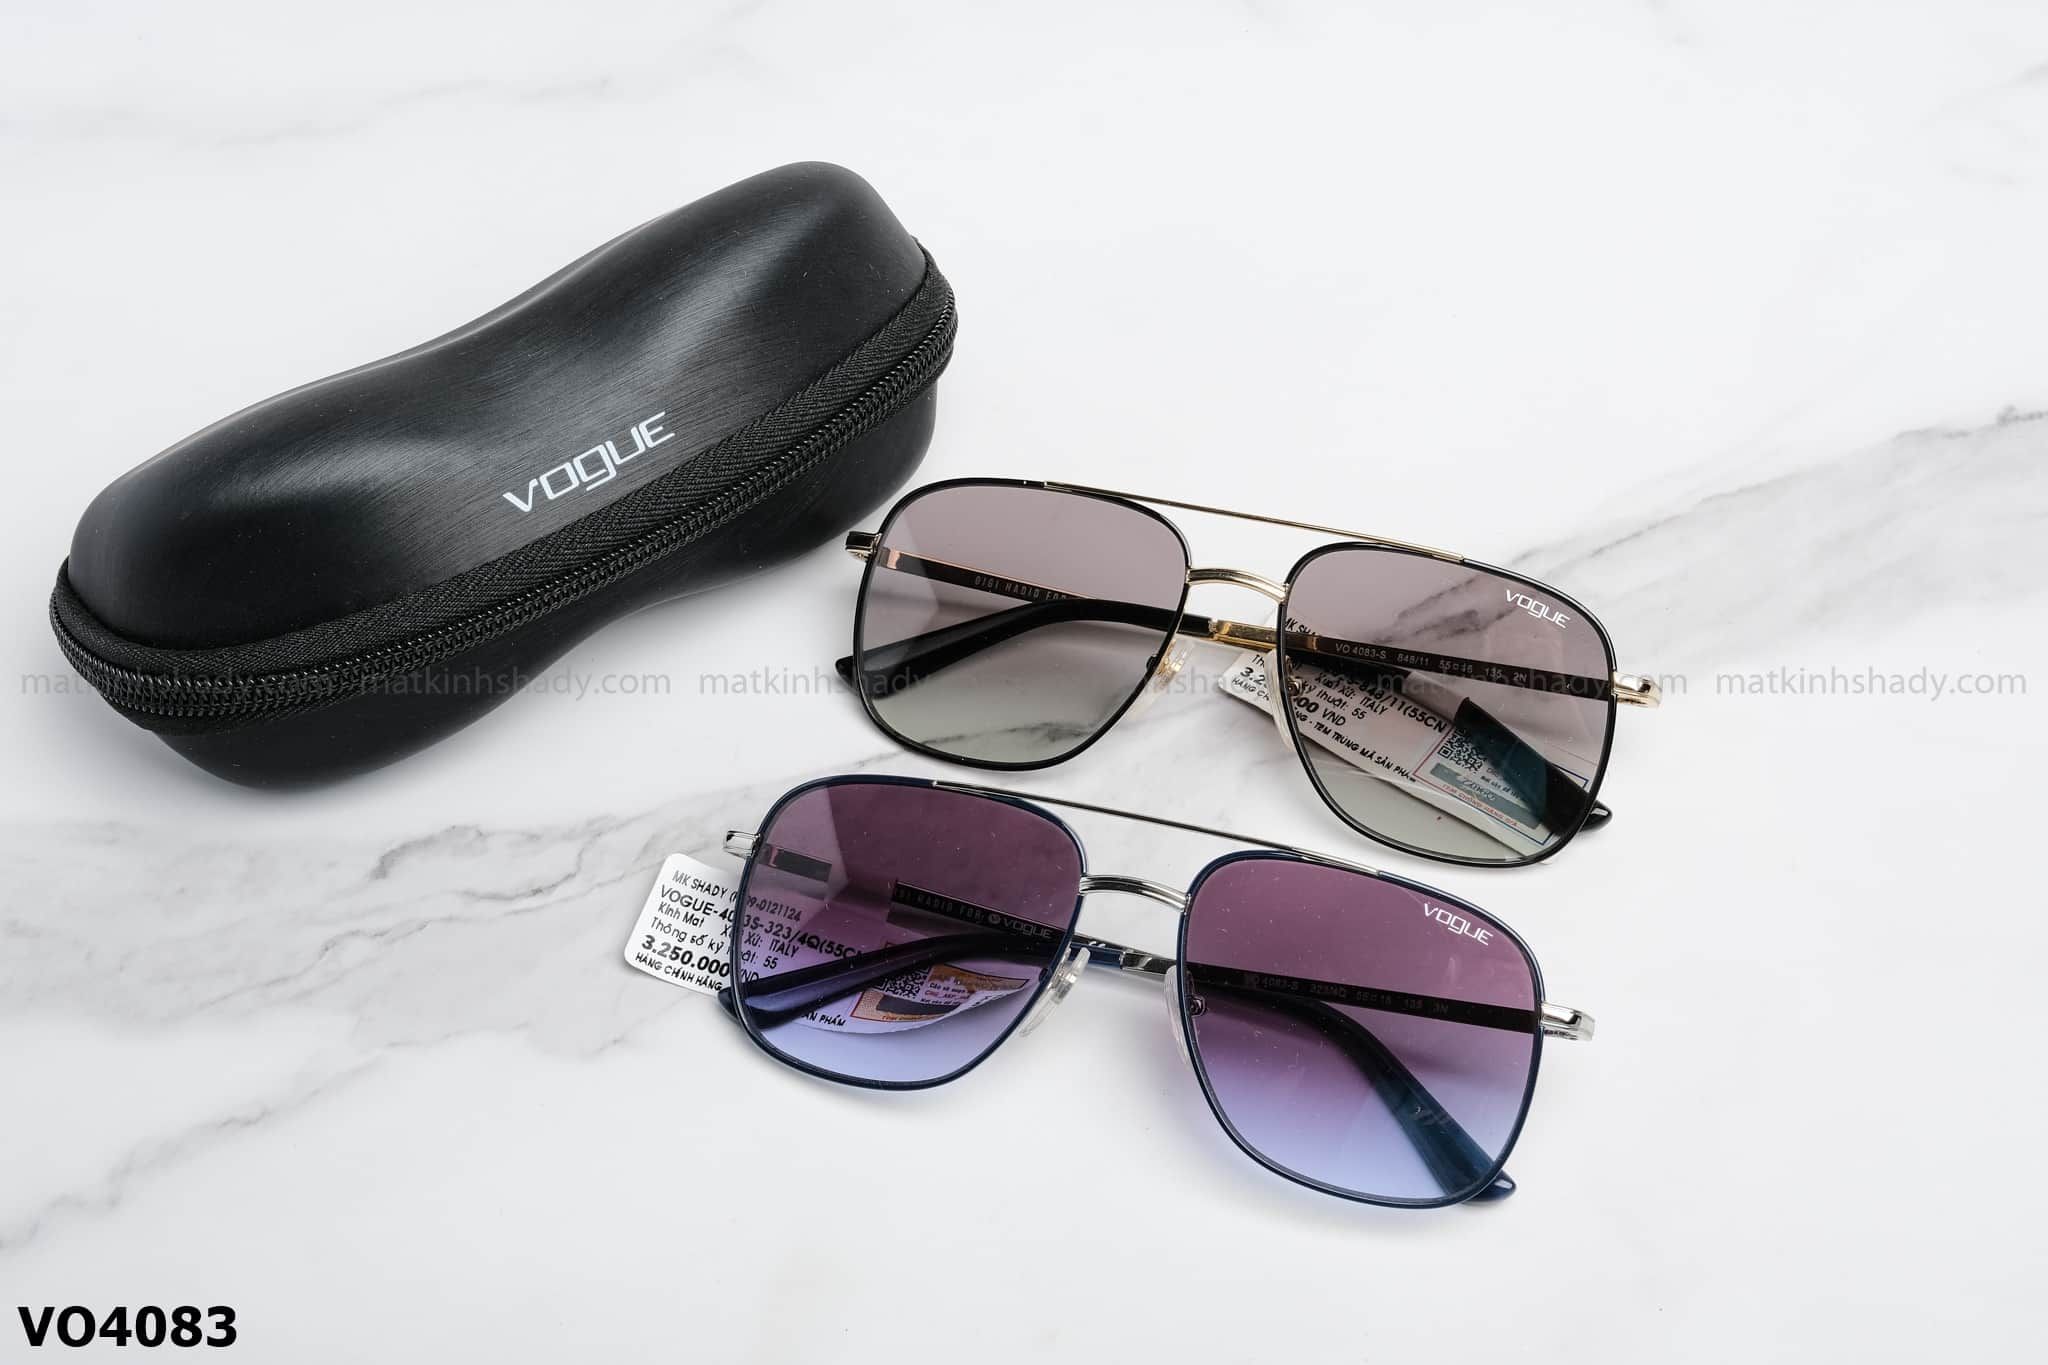  Vogue Eyewear - Sunglasses - VO4083 